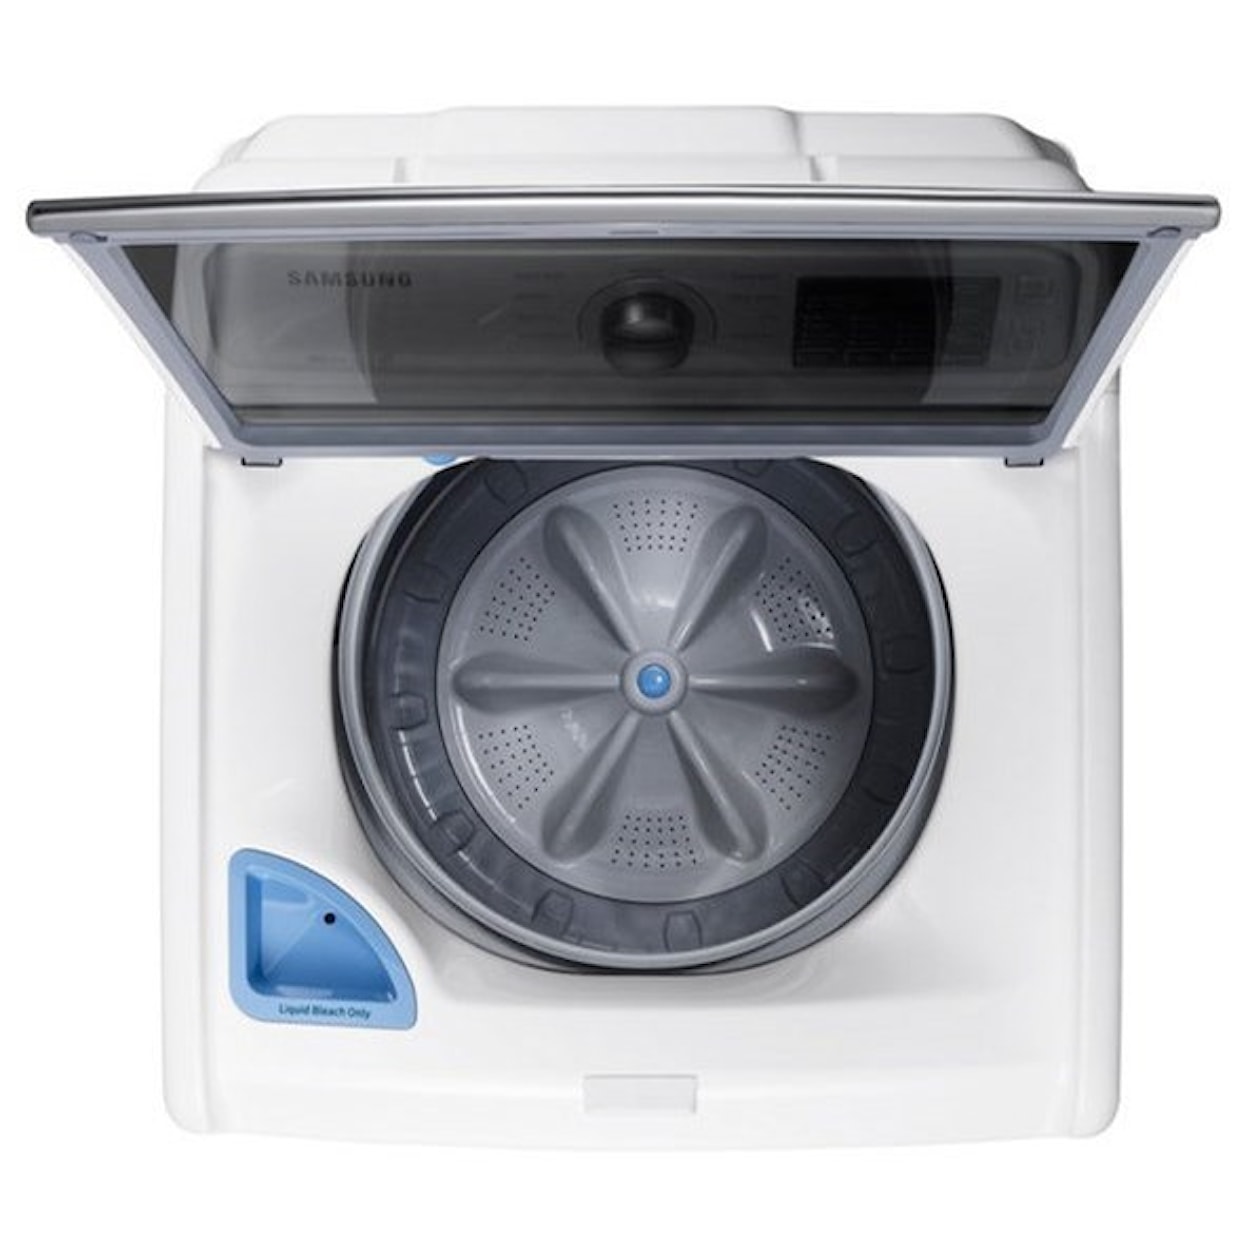 Samsung Appliances Top Load Washers - Samsung WA7050 4.5 cu. ft. Top Load Washer